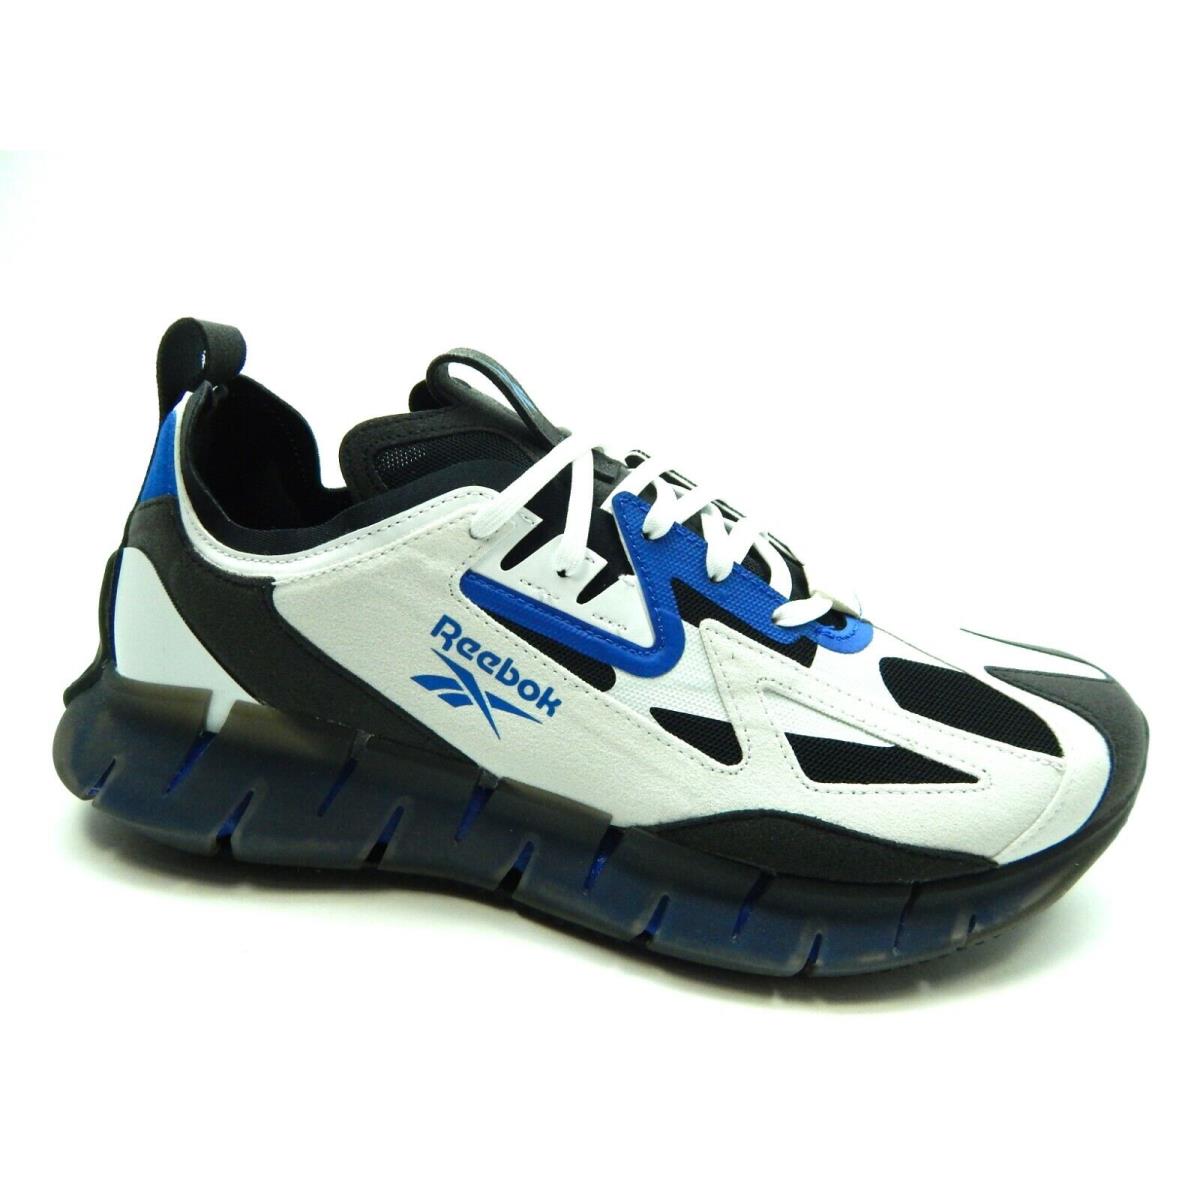 Reebok Zig Kinetica FW5735 Humble Blue Men Shoes Size 13